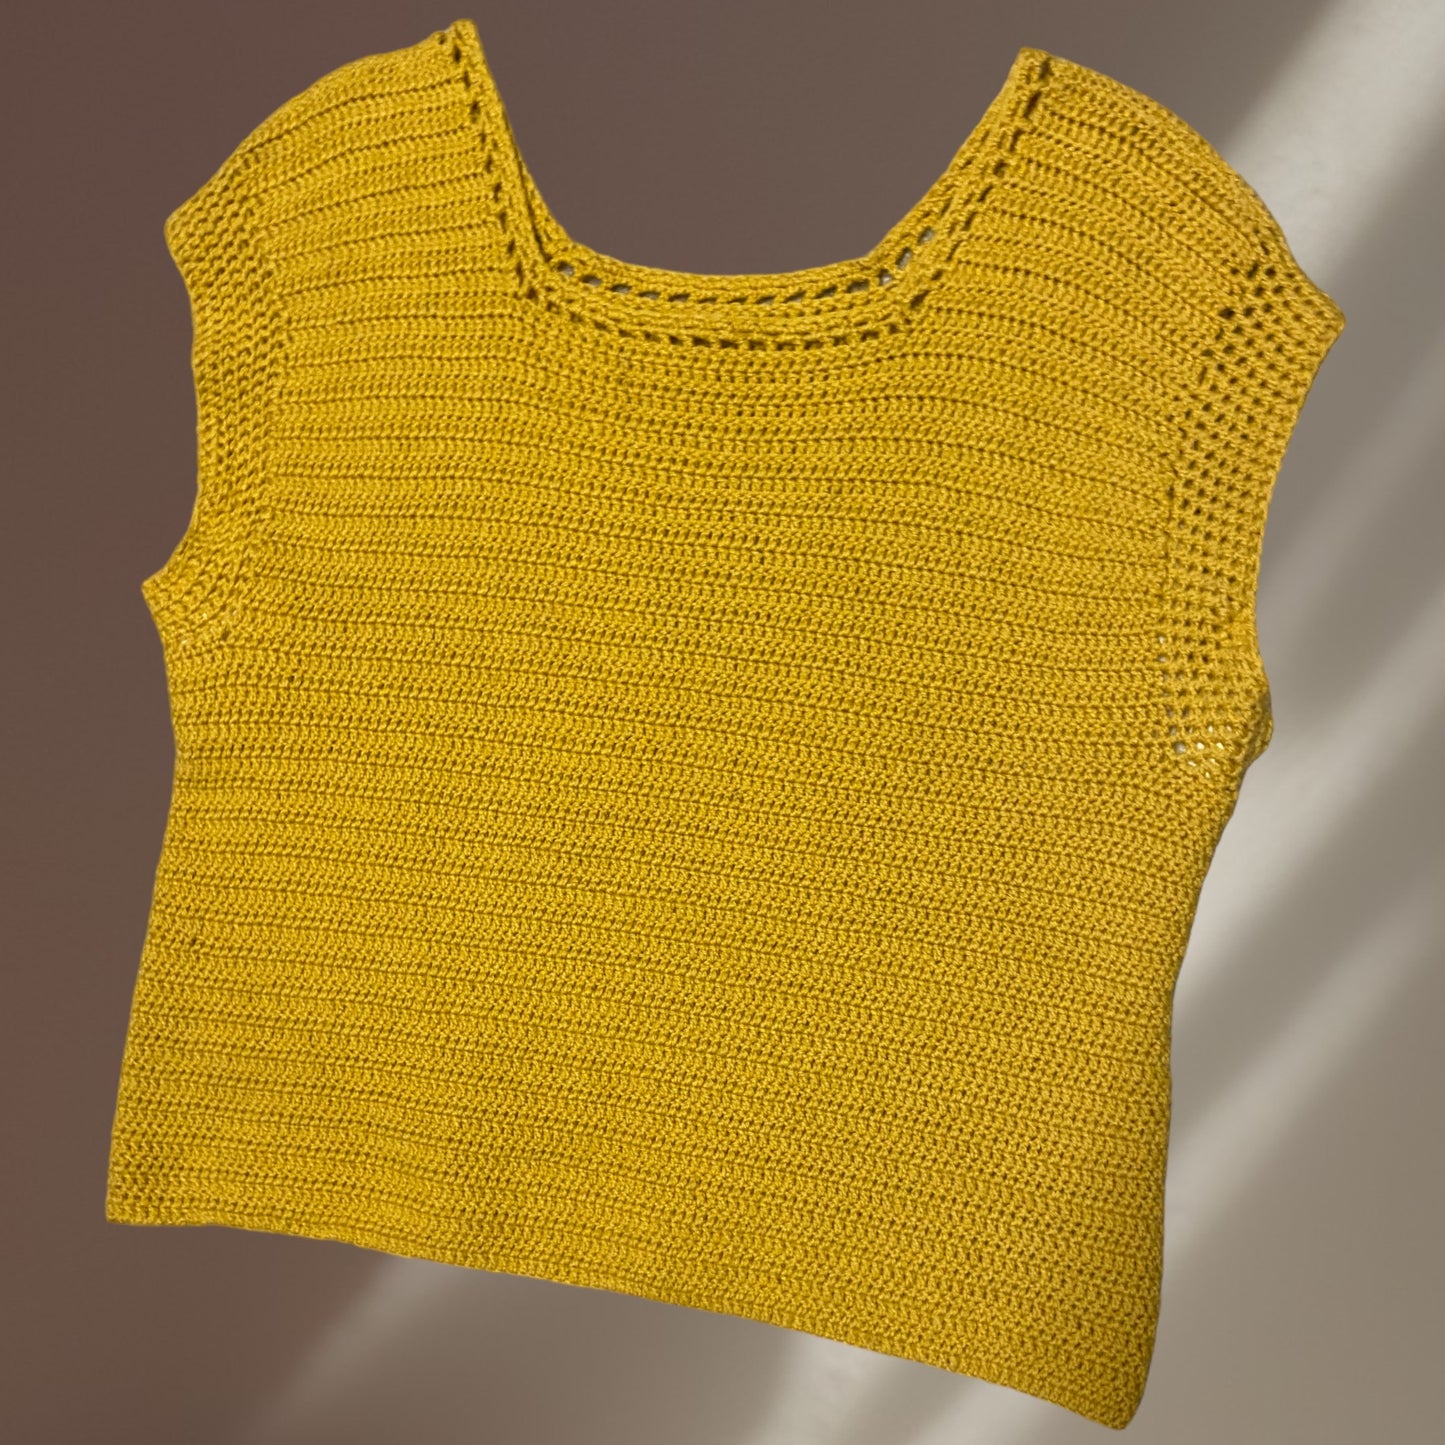 Ositn Crochet Vest Size 14